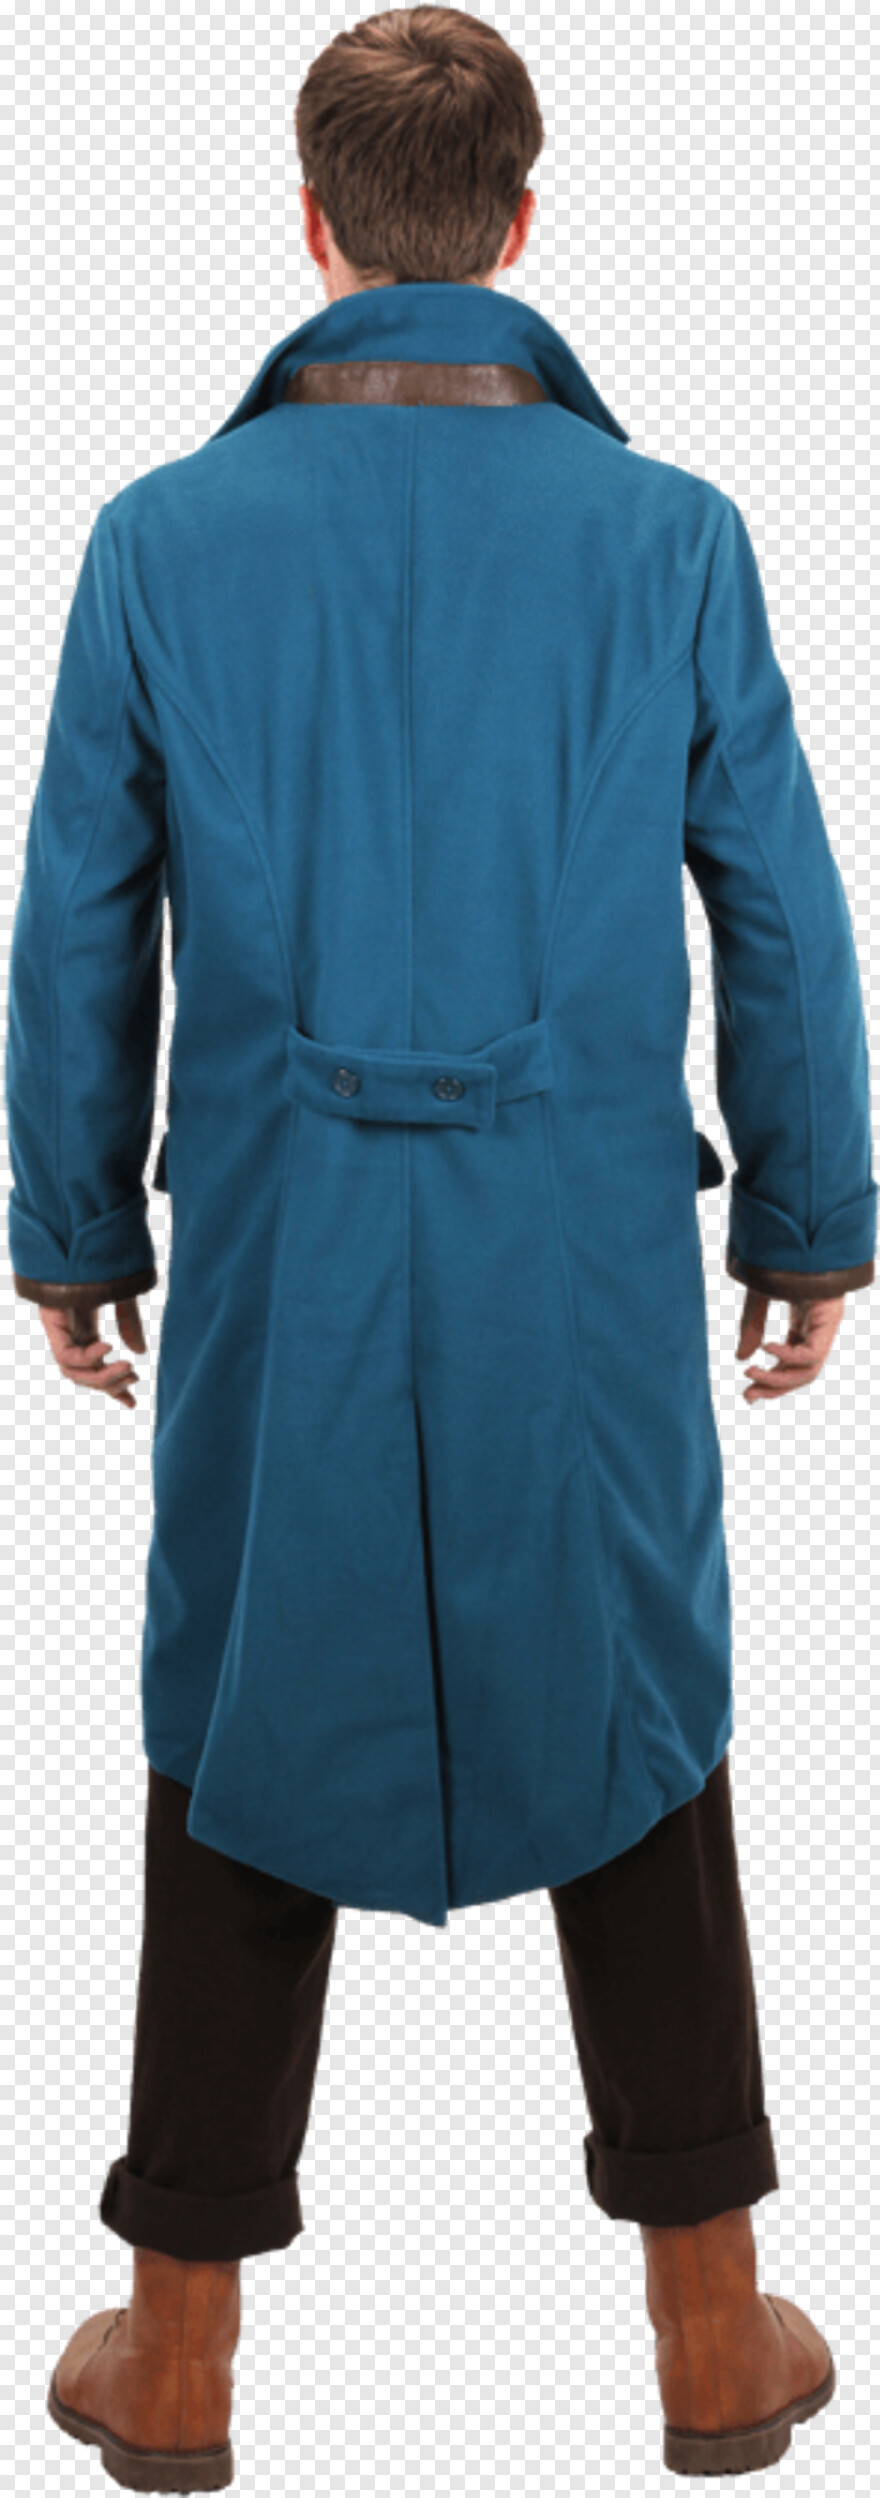 coat-pant # 386051